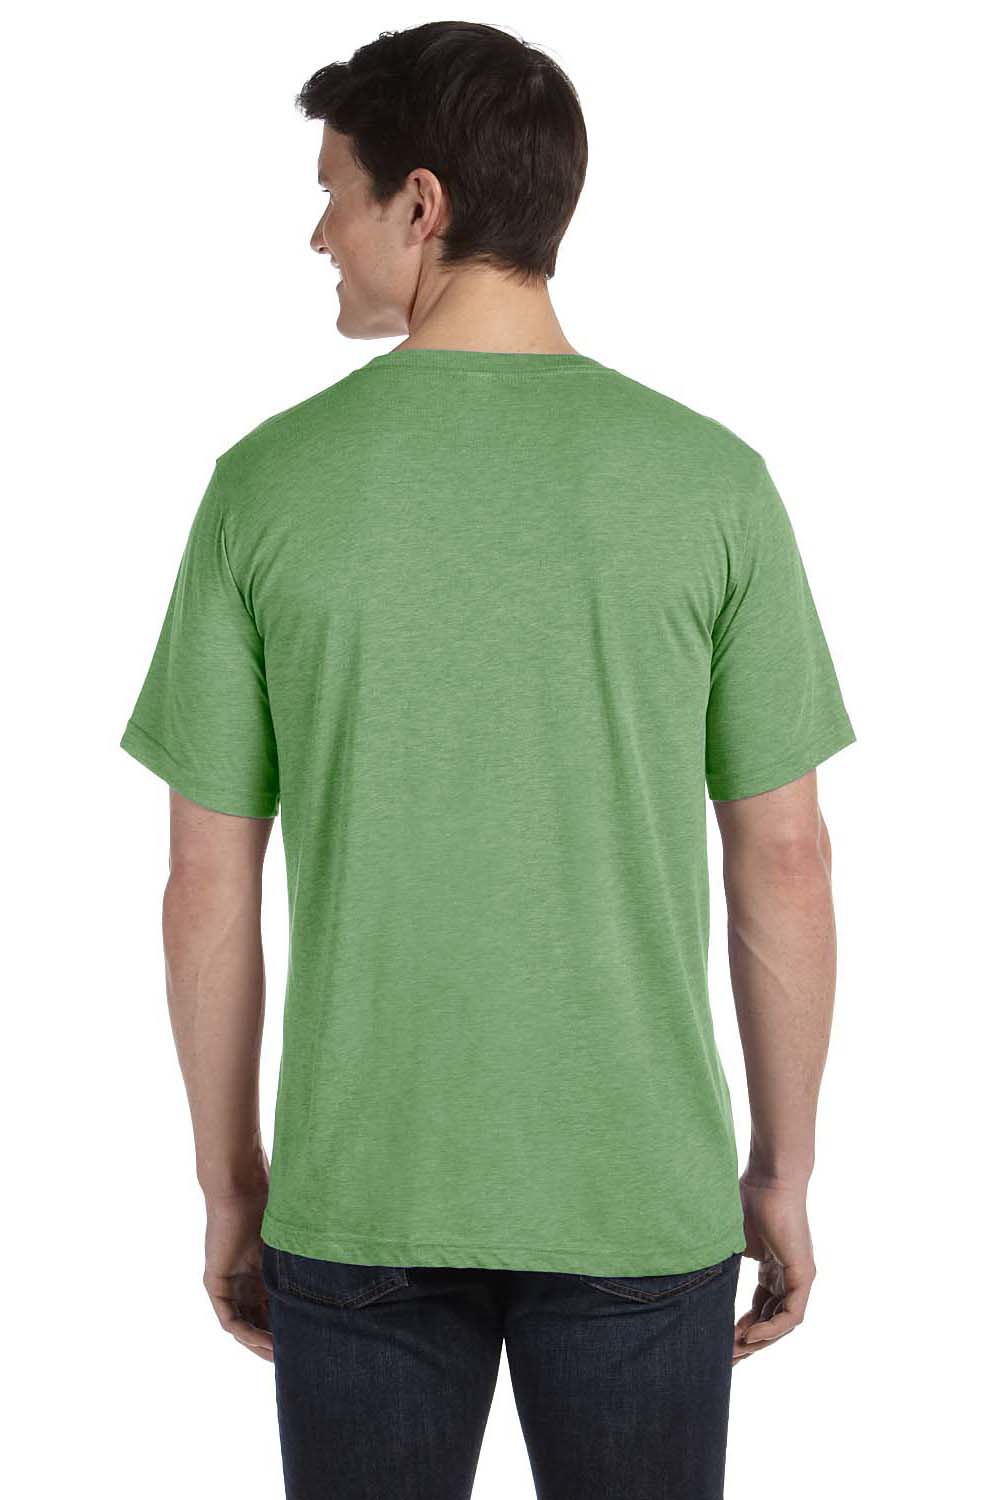 Bella + Canvas 3415C Mens Short Sleeve V-Neck T-Shirt Green Back